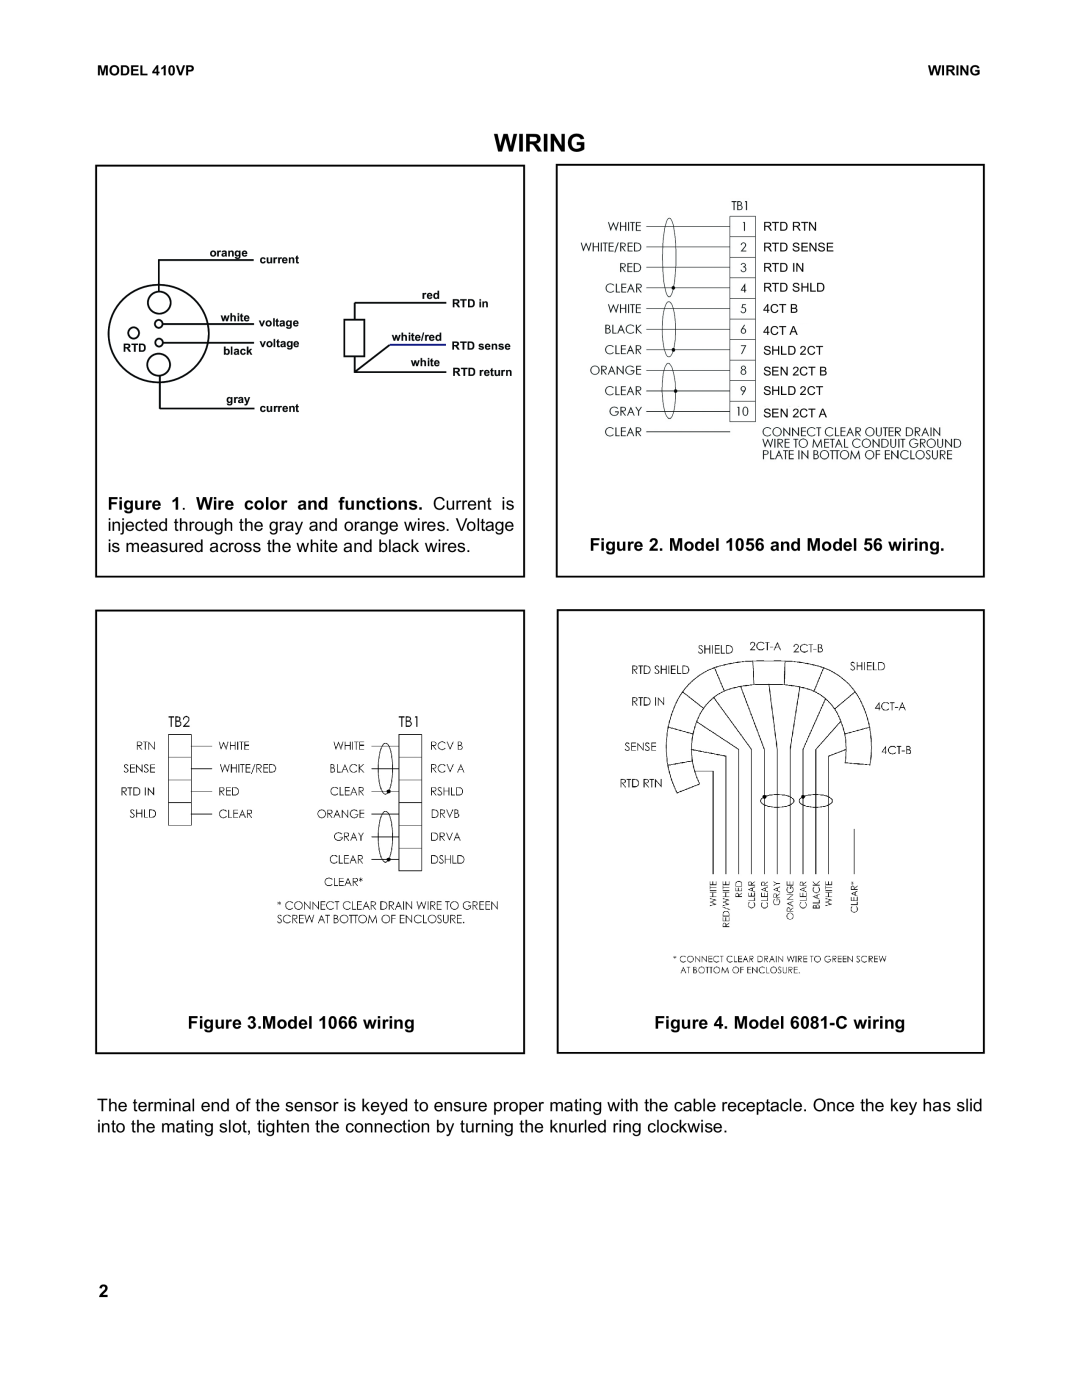 Emerson PN 51A-410VP instruction sheet Wiring 